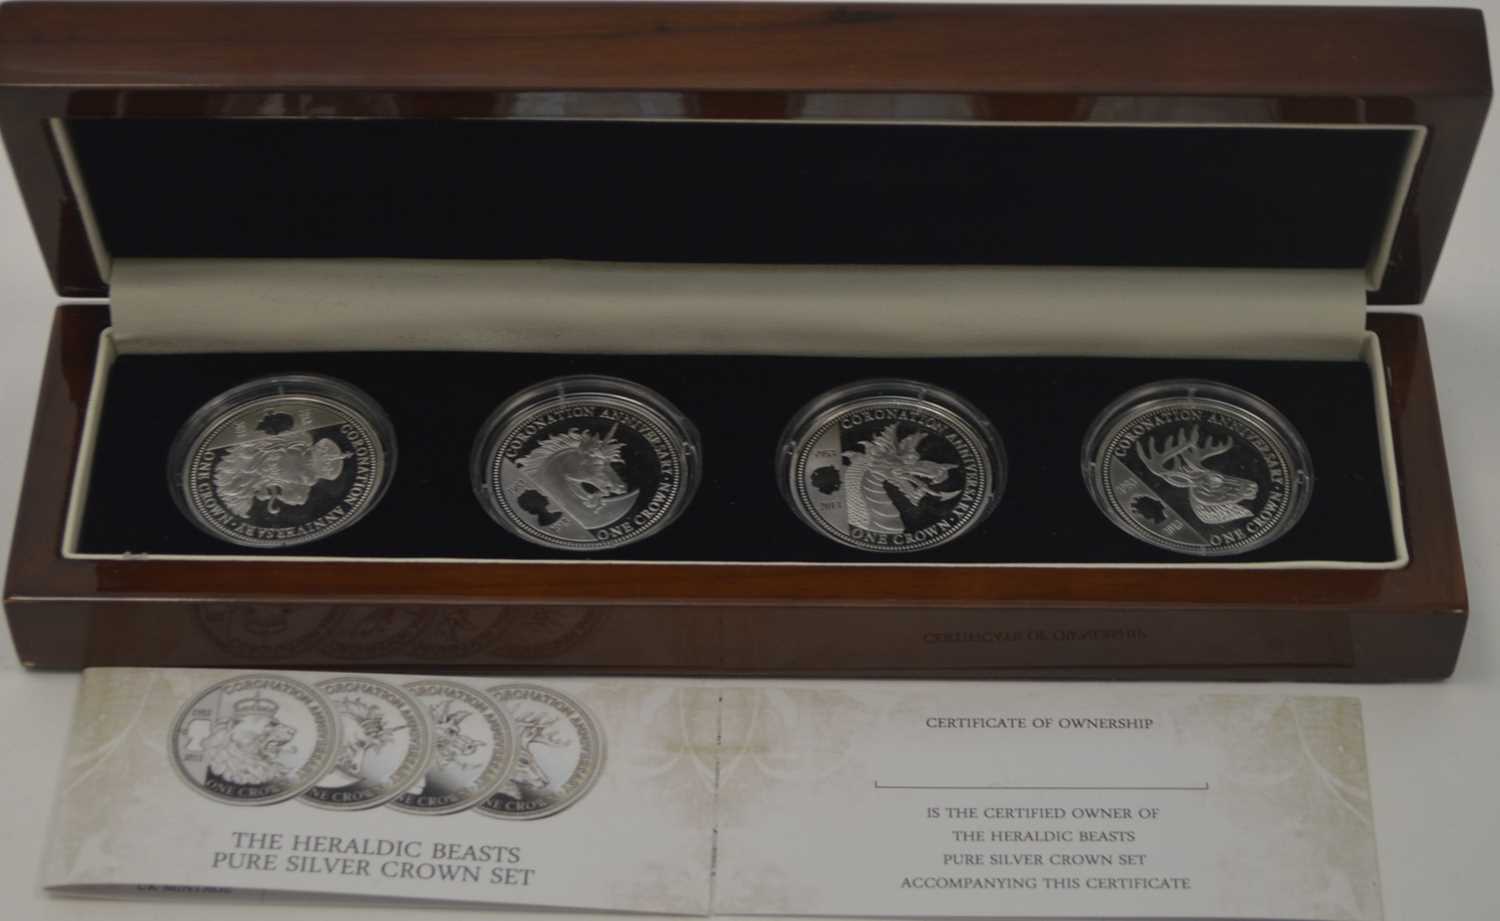 Lot 879 - Royal Mint, United Kingdom: The Heraldic Beasts pure silver crown set